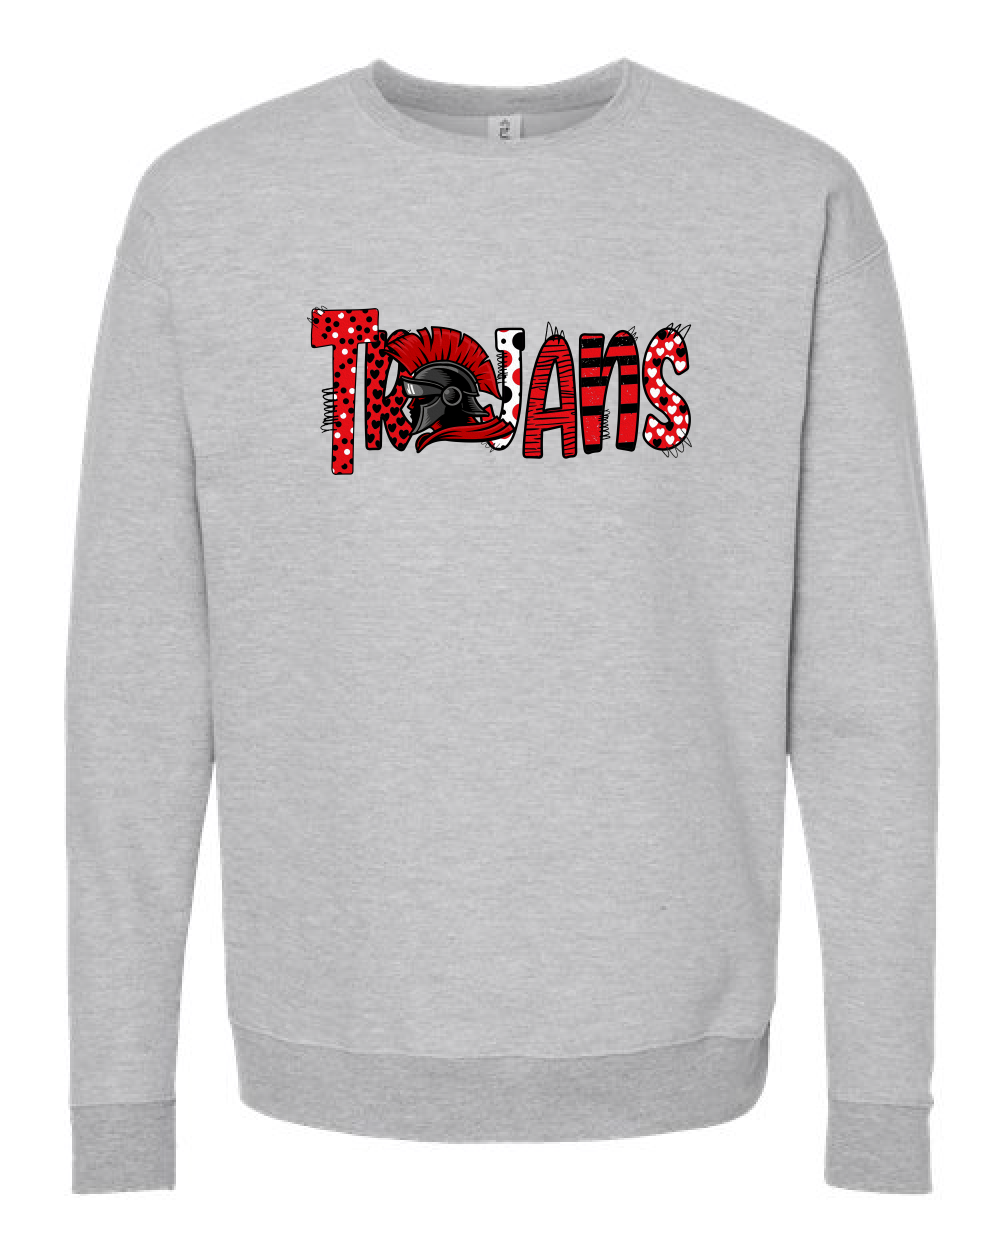 Lady Trojans Sweatshirt